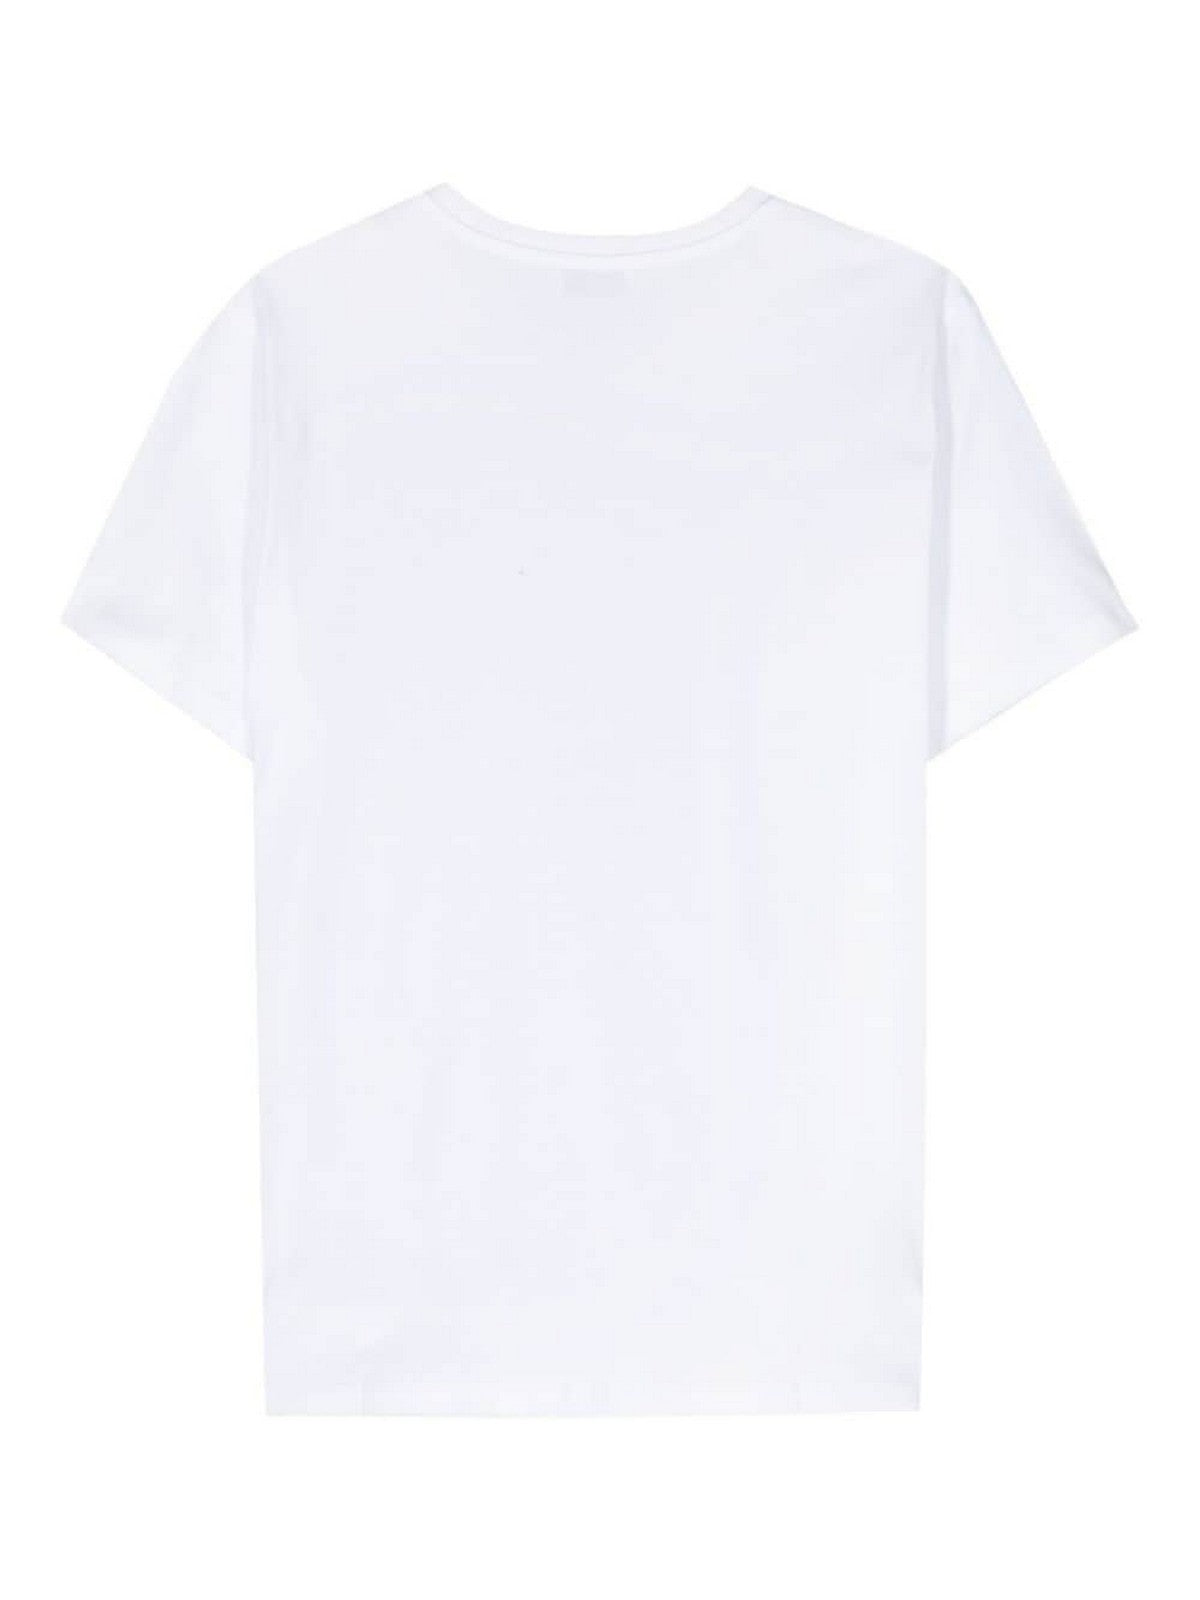 DONDUP T-Shirt e Polo Uomo  US198 JF0309U HN5 000 Bianco